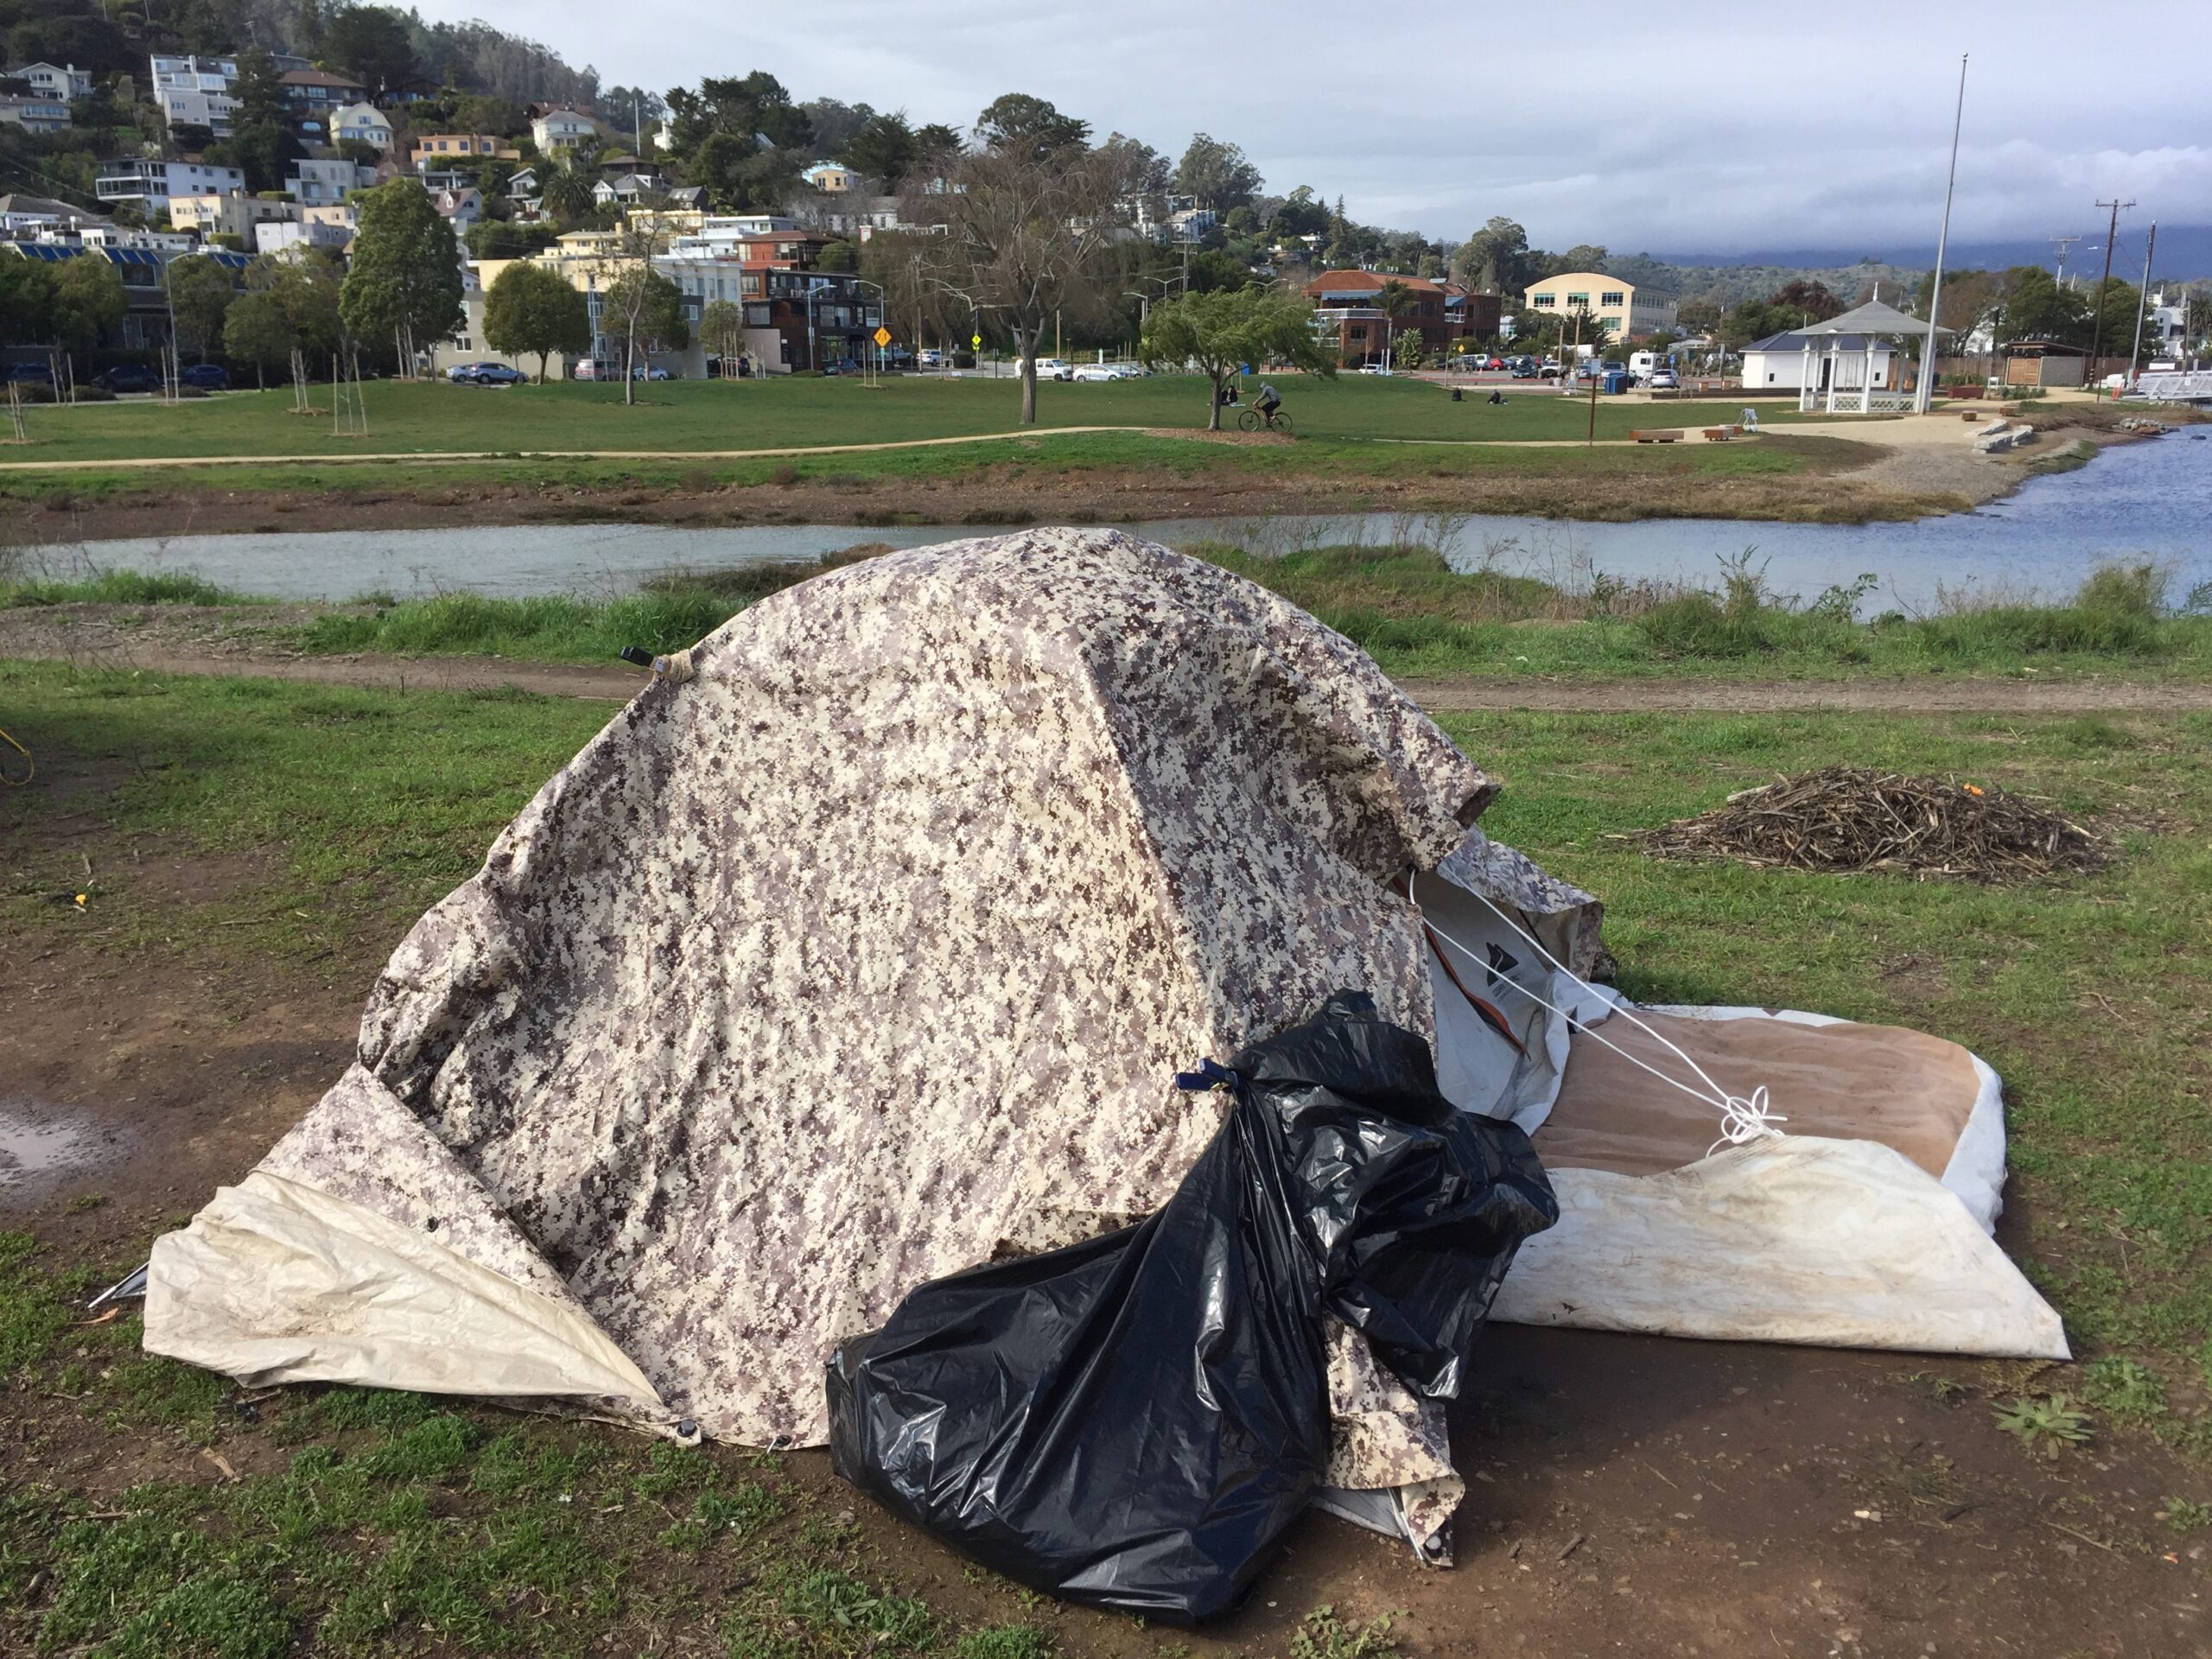 Tent - Marin County, California